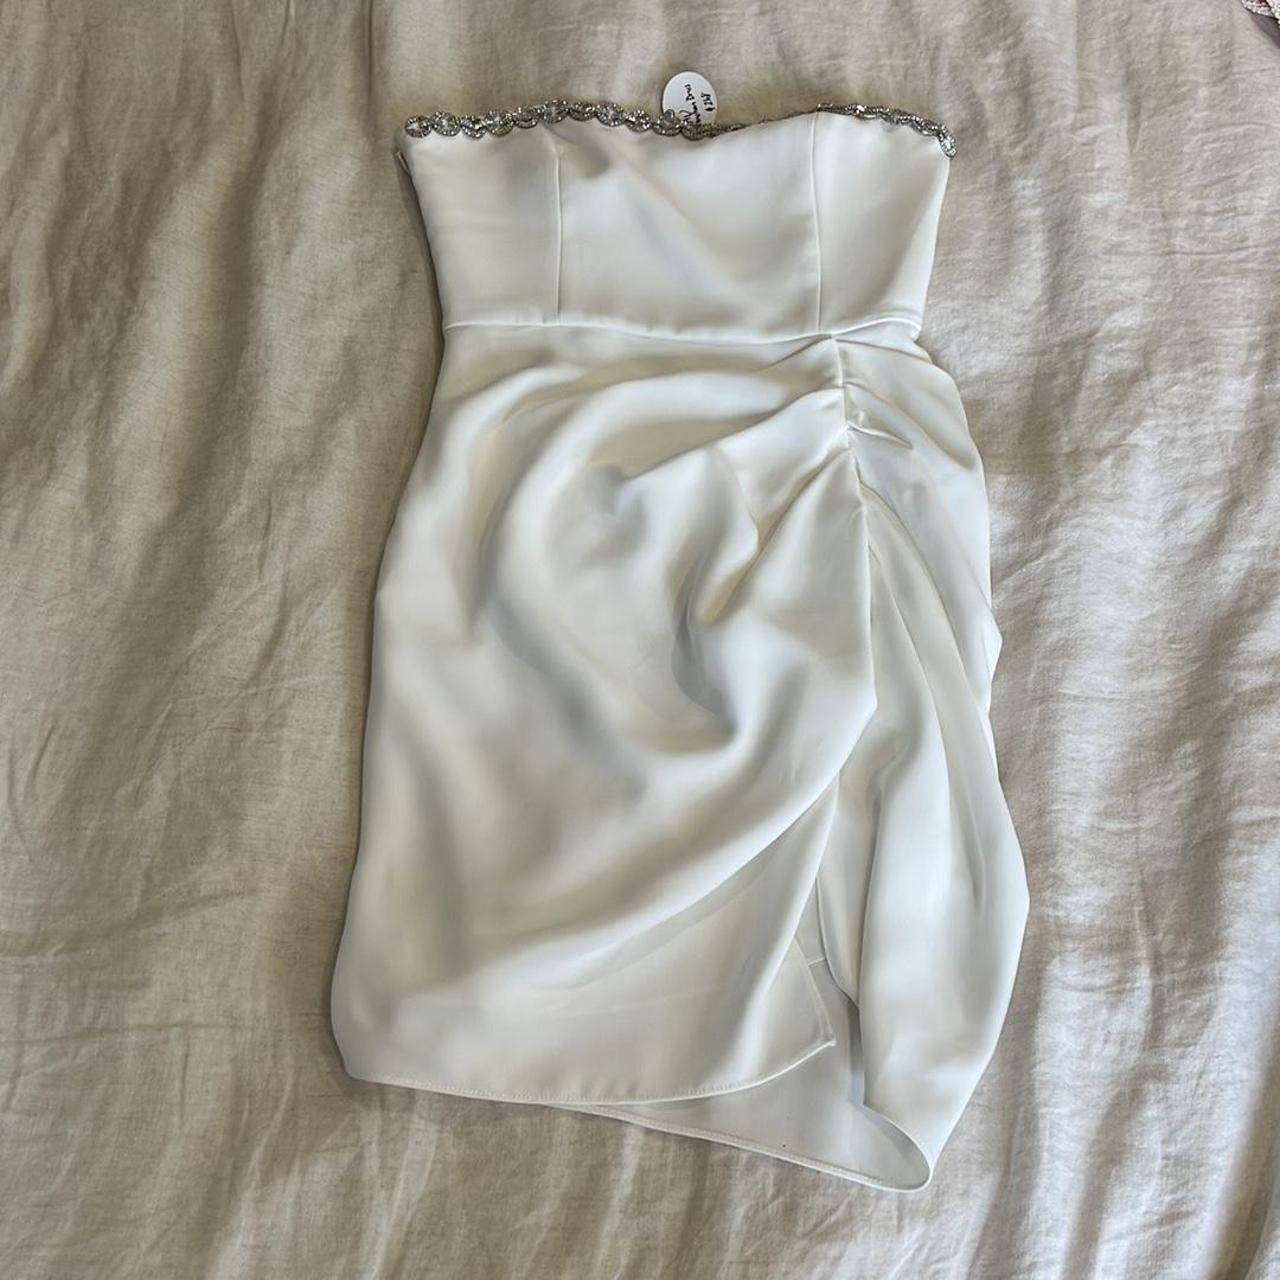 Amanda Uprichard Women's White Dress | Depop